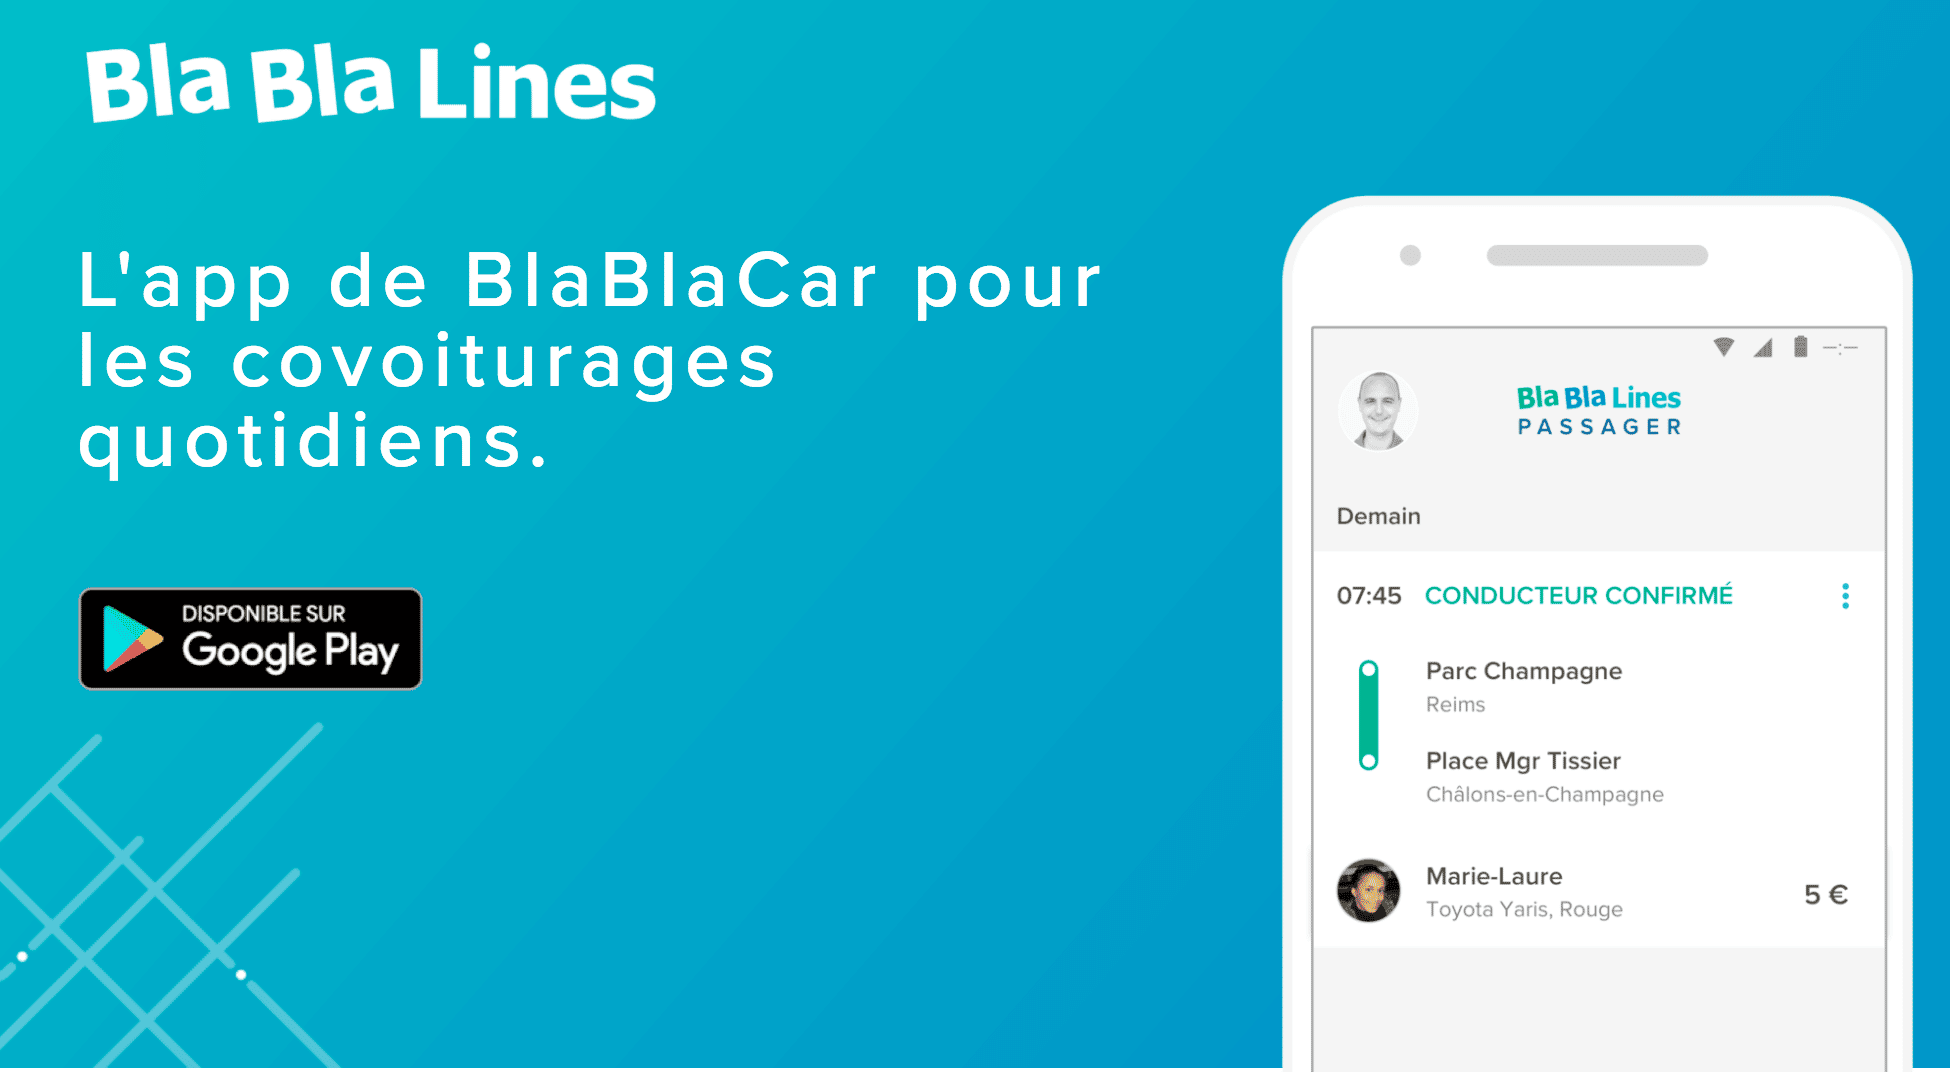 blablacar lines